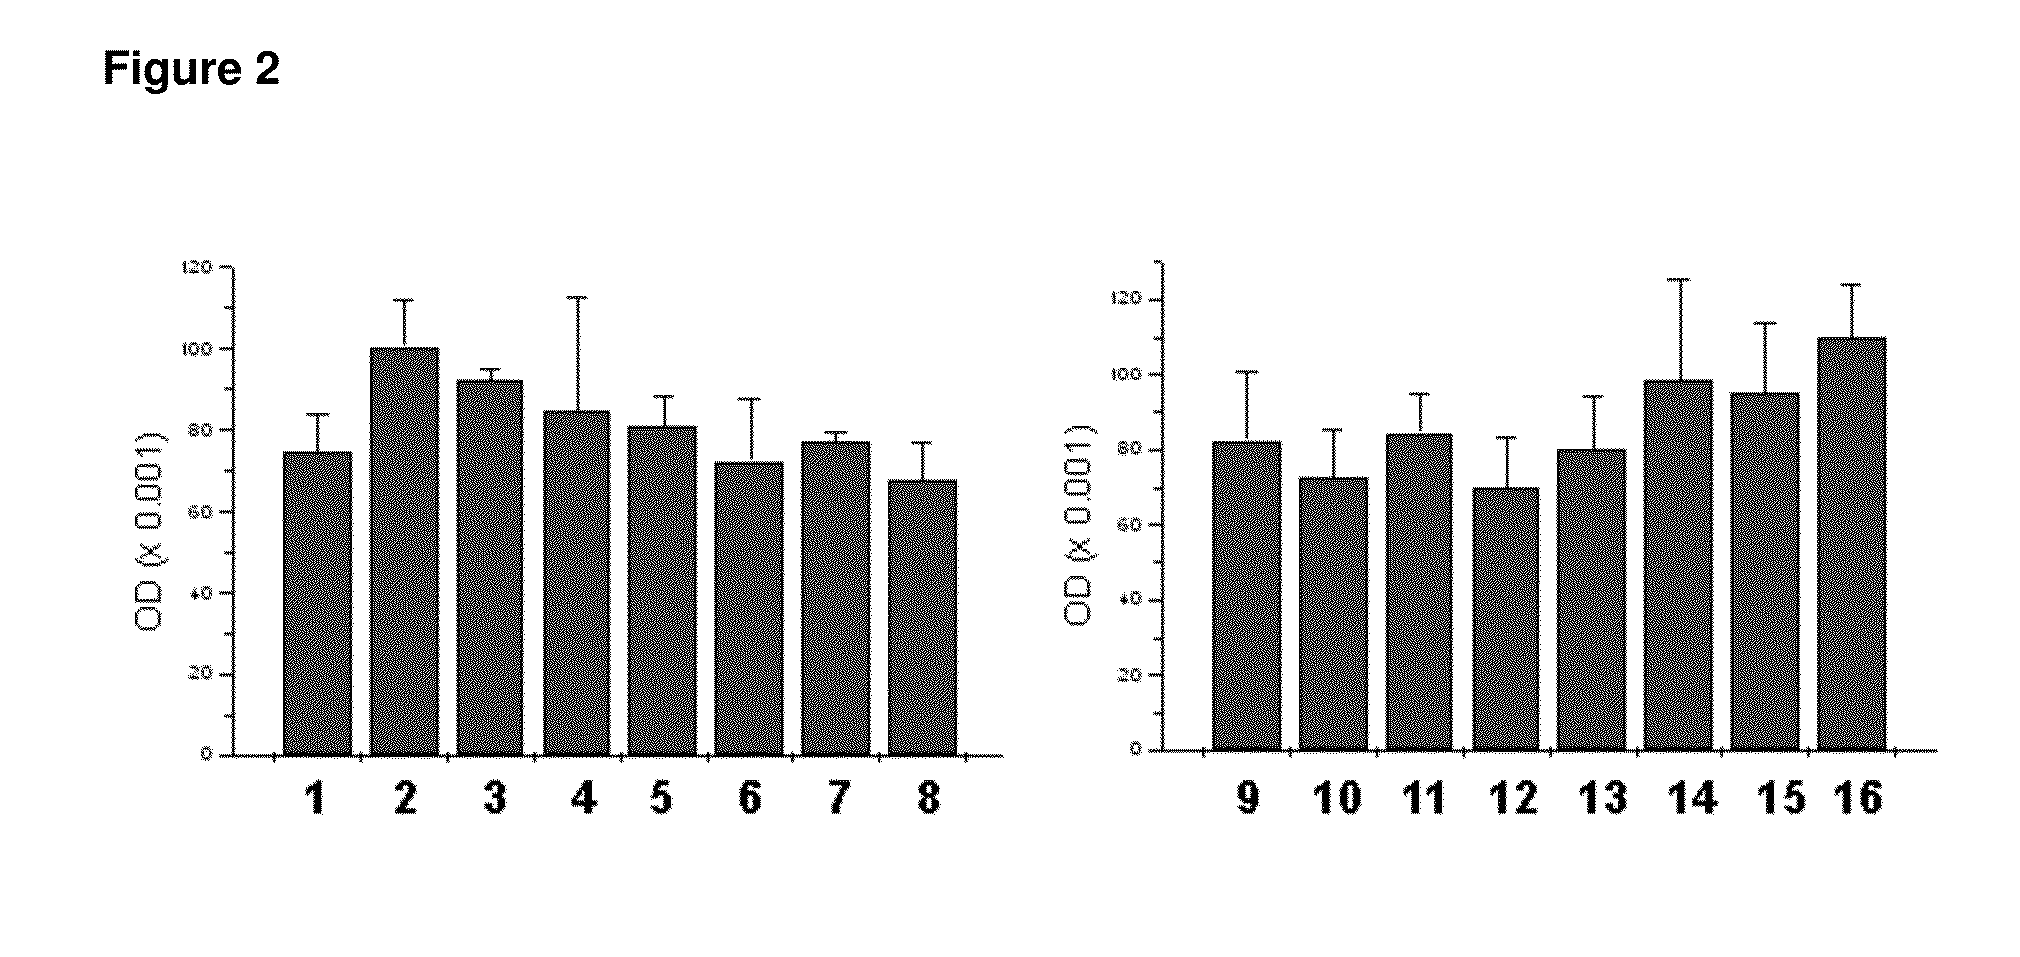 Composition comprising peroxisome proliferator-activated receptor-gamma